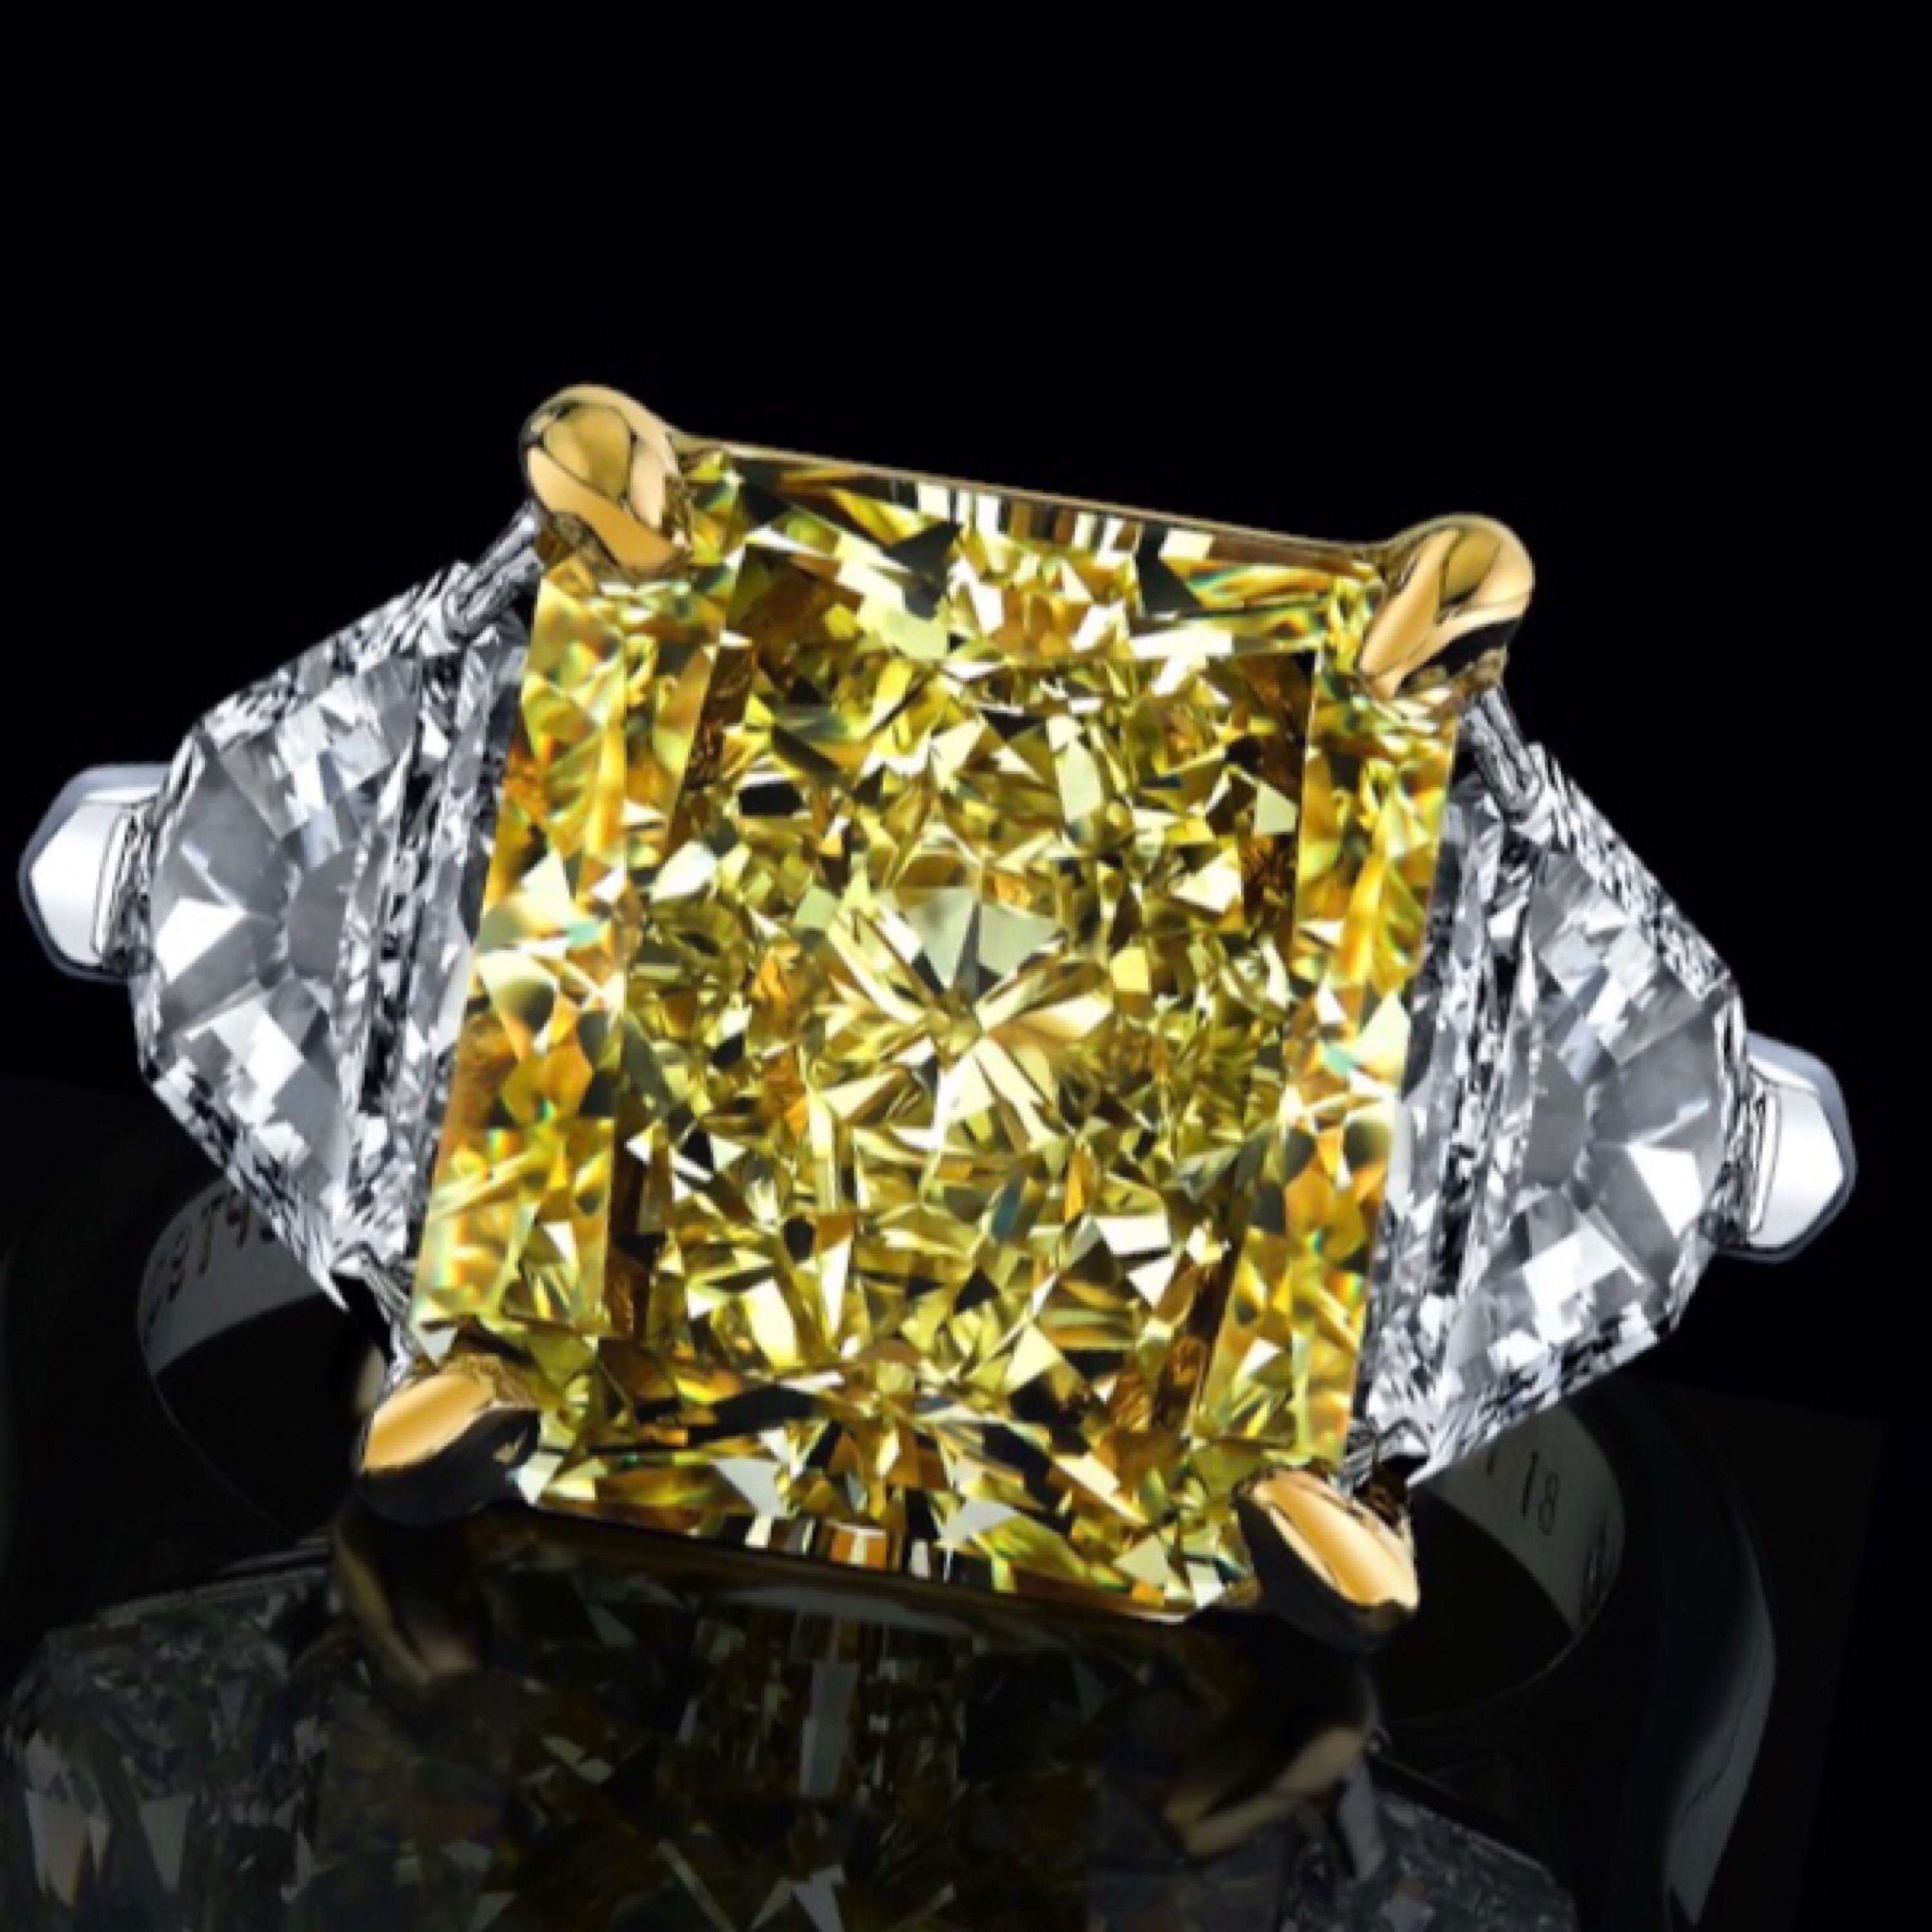 Radiant Cut Emilio Jewelry GIA Certified 8.00 Carat Fancy Yellow Diamond Ring